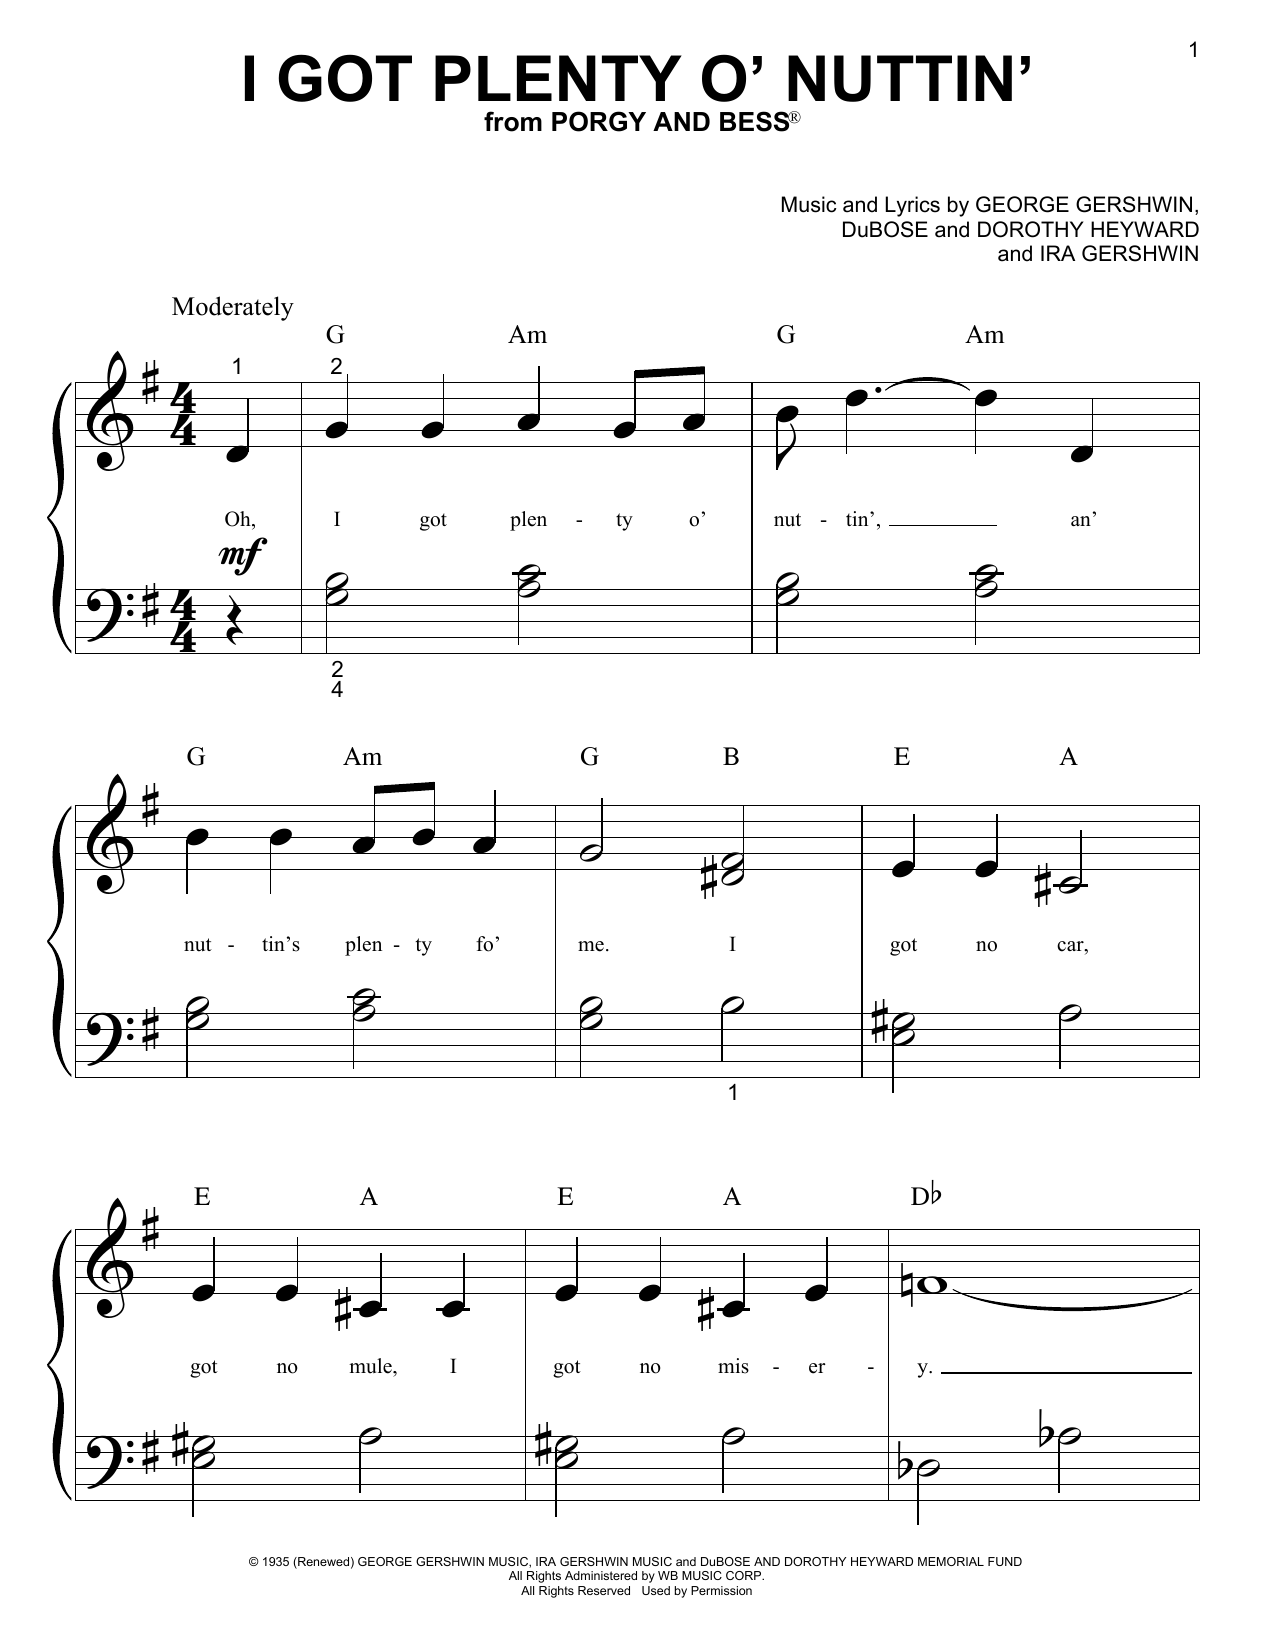 George Gershwin I Got Plenty O' Nuttin' Sheet Music Notes & Chords for Alto Saxophone - Download or Print PDF